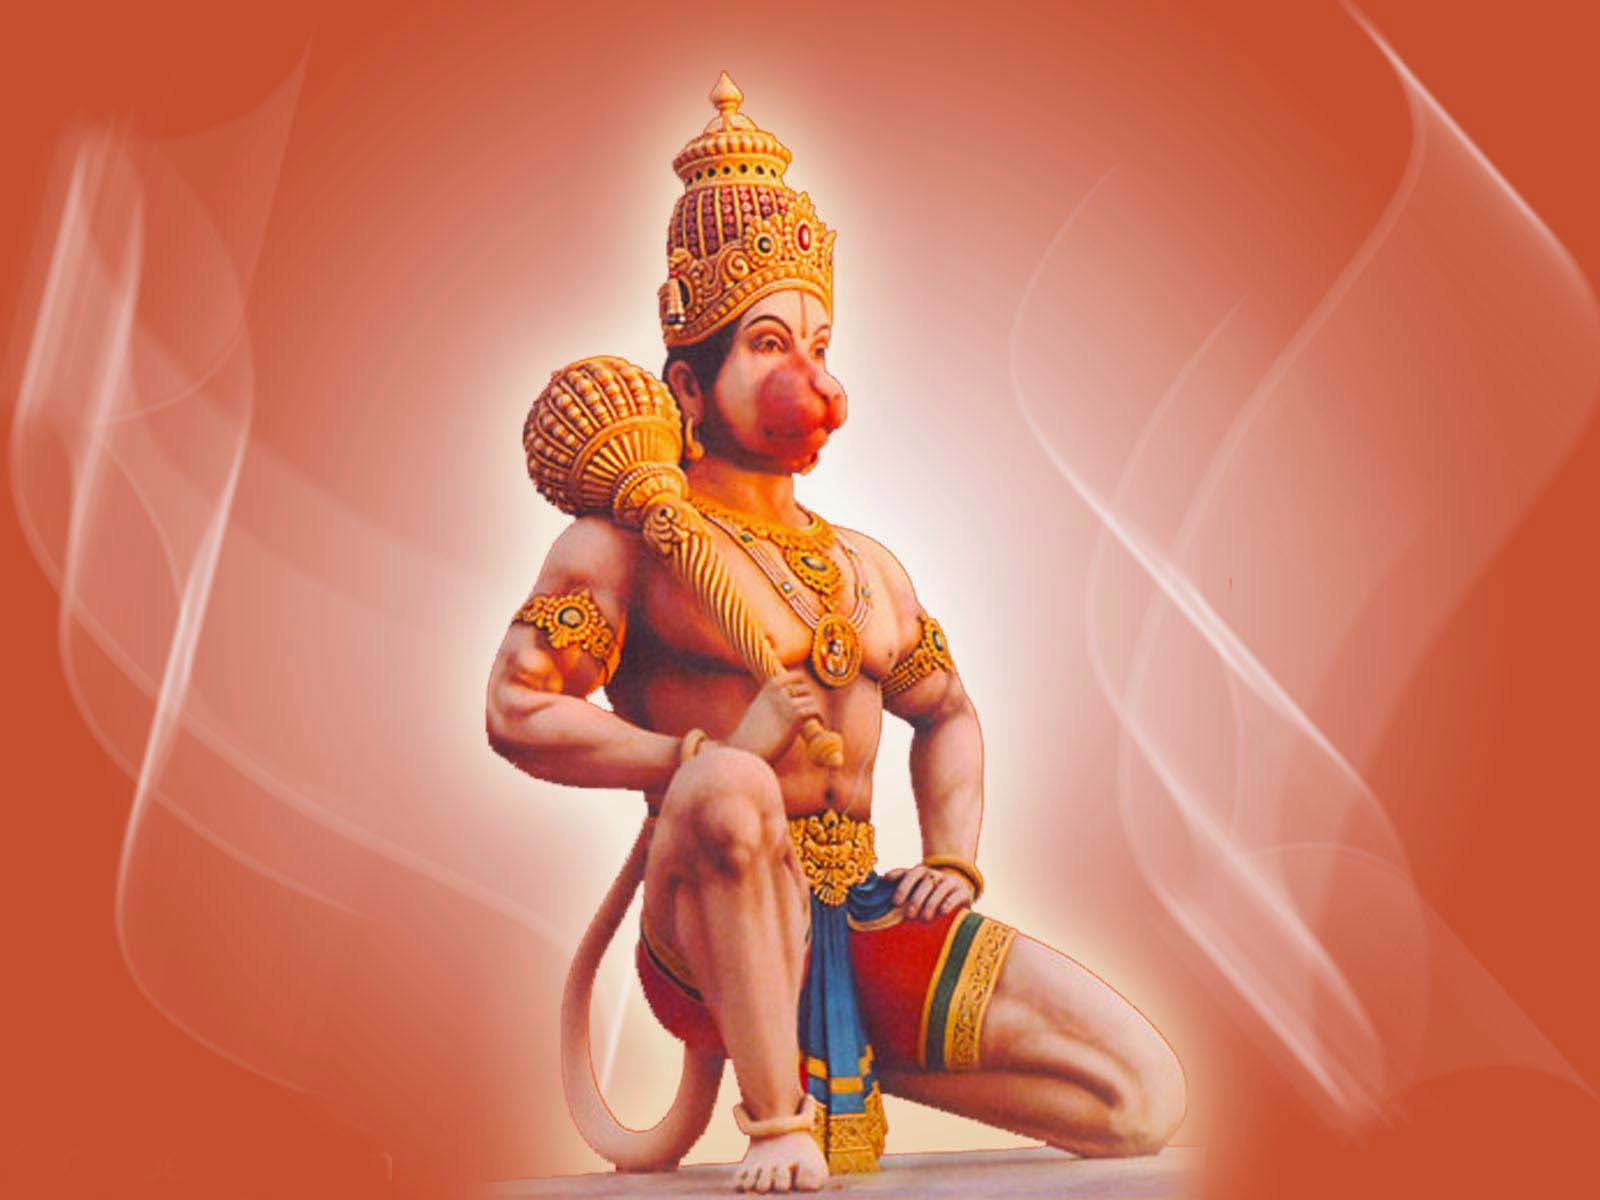 New HD images of Hanumanji Free Download.